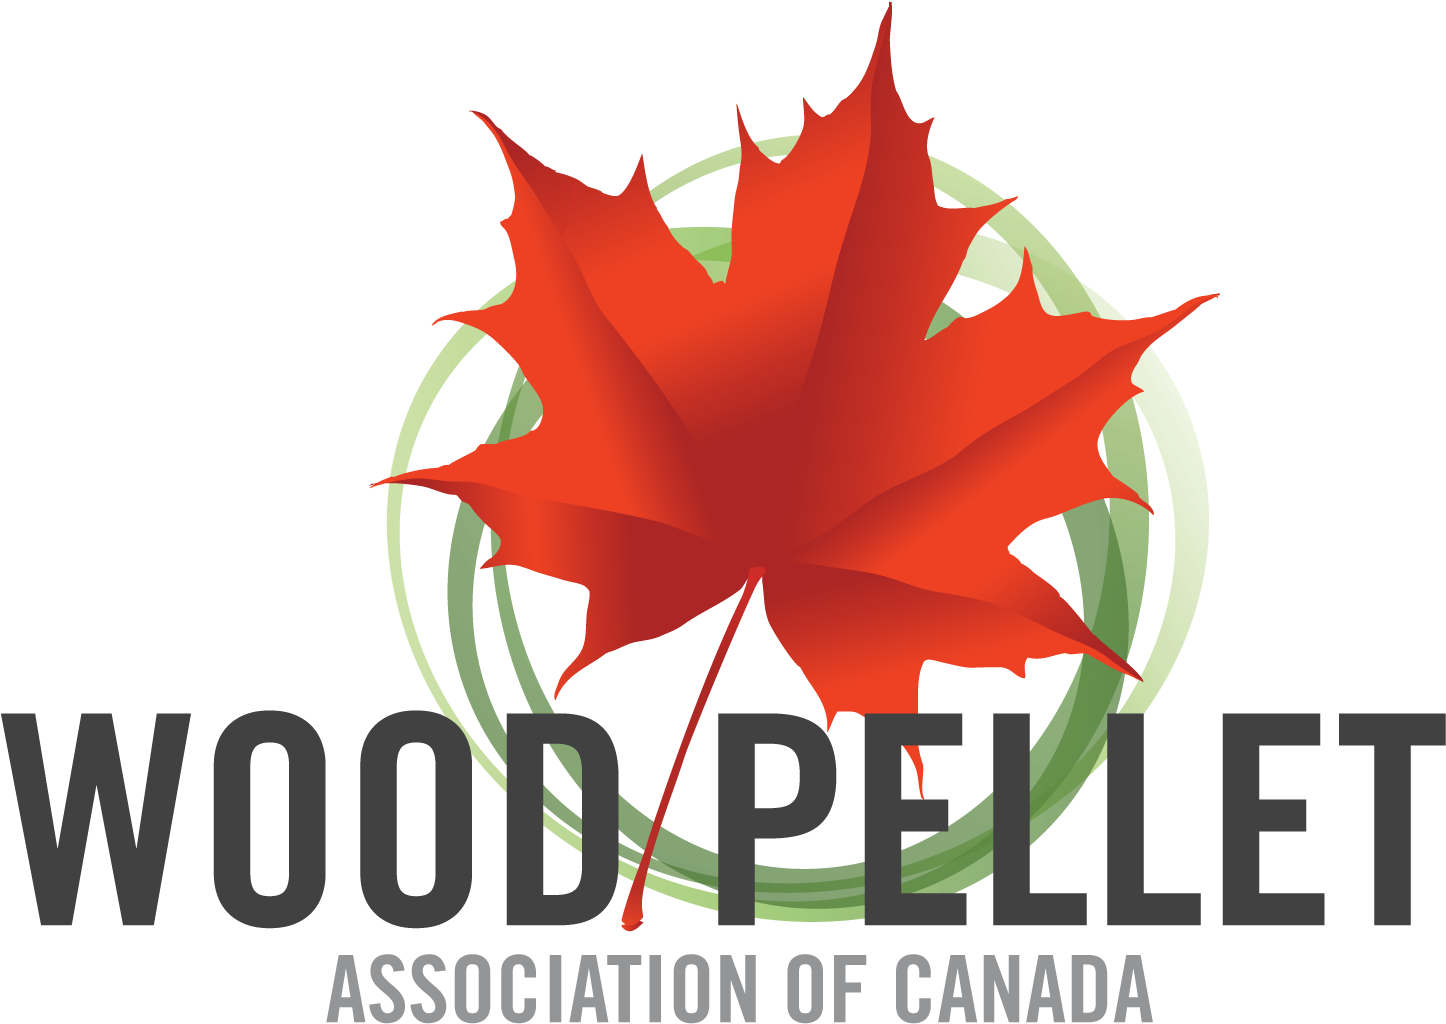 Wood Pellet Association Of Canada - Wood Pellet Association Of Canada (1800x1060)